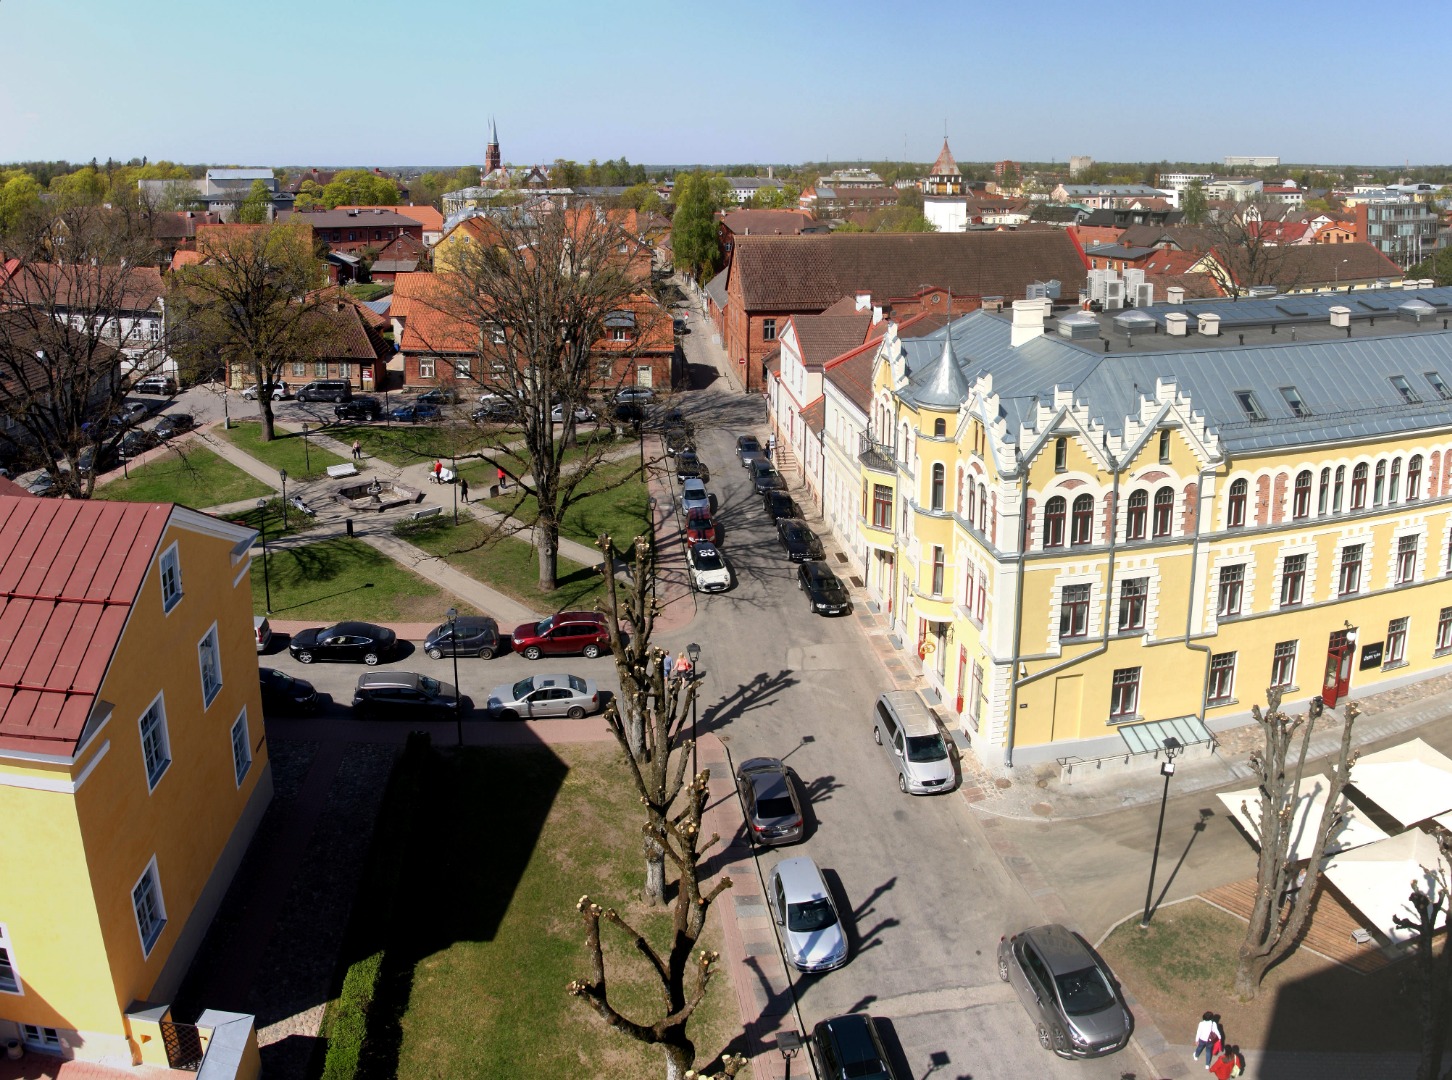 Viljandi city centre. rephoto